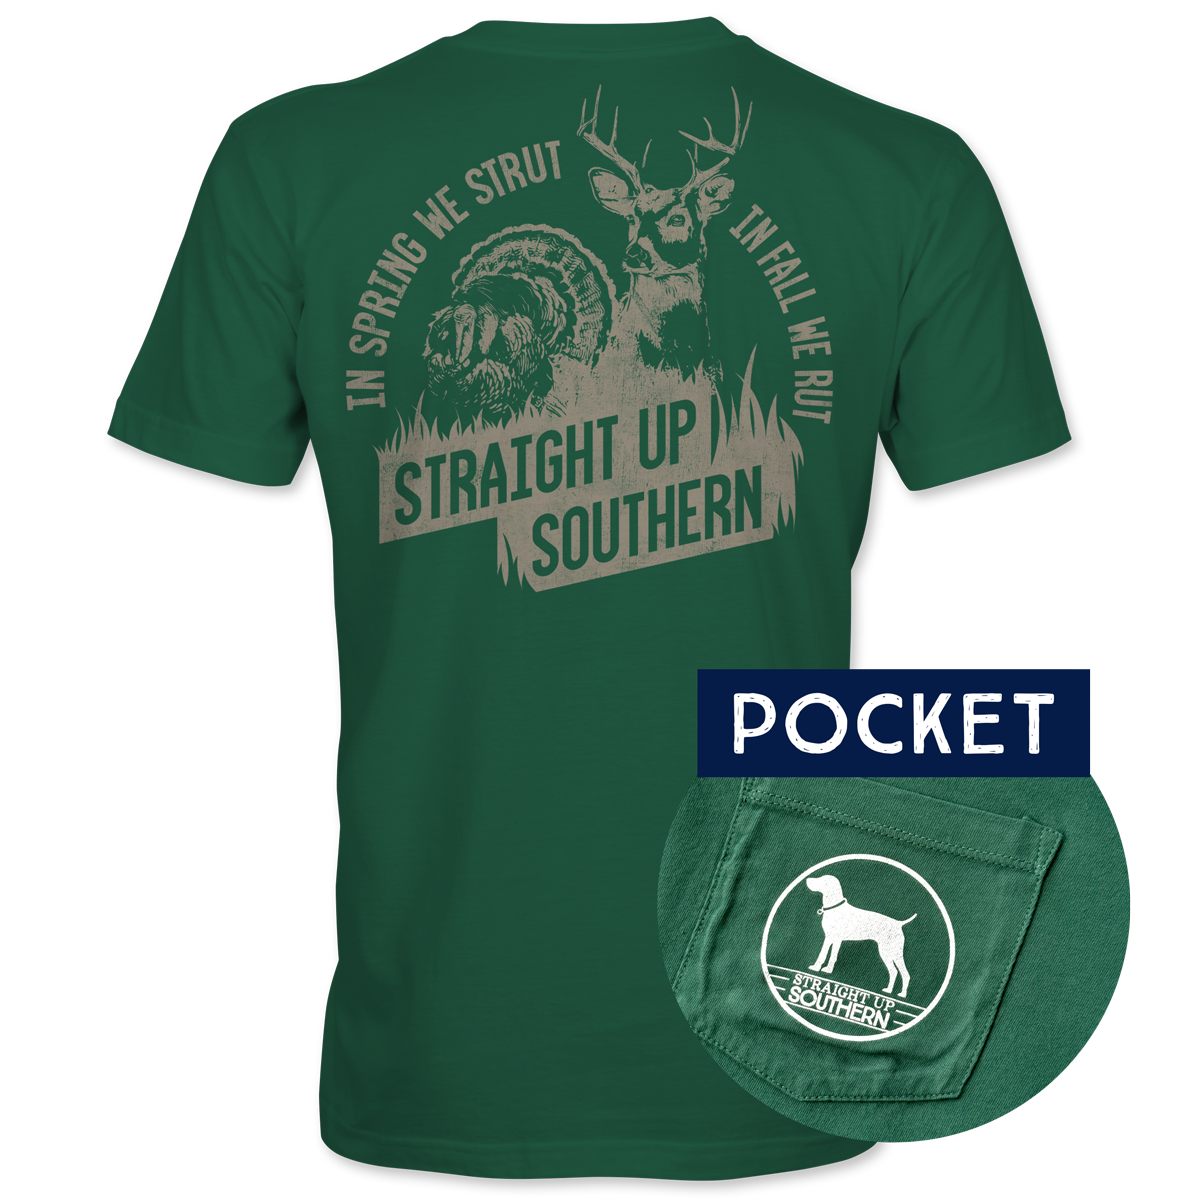 Strut and Rut - Turkey and Whitetail Buck Hunting T-Shirt - Green